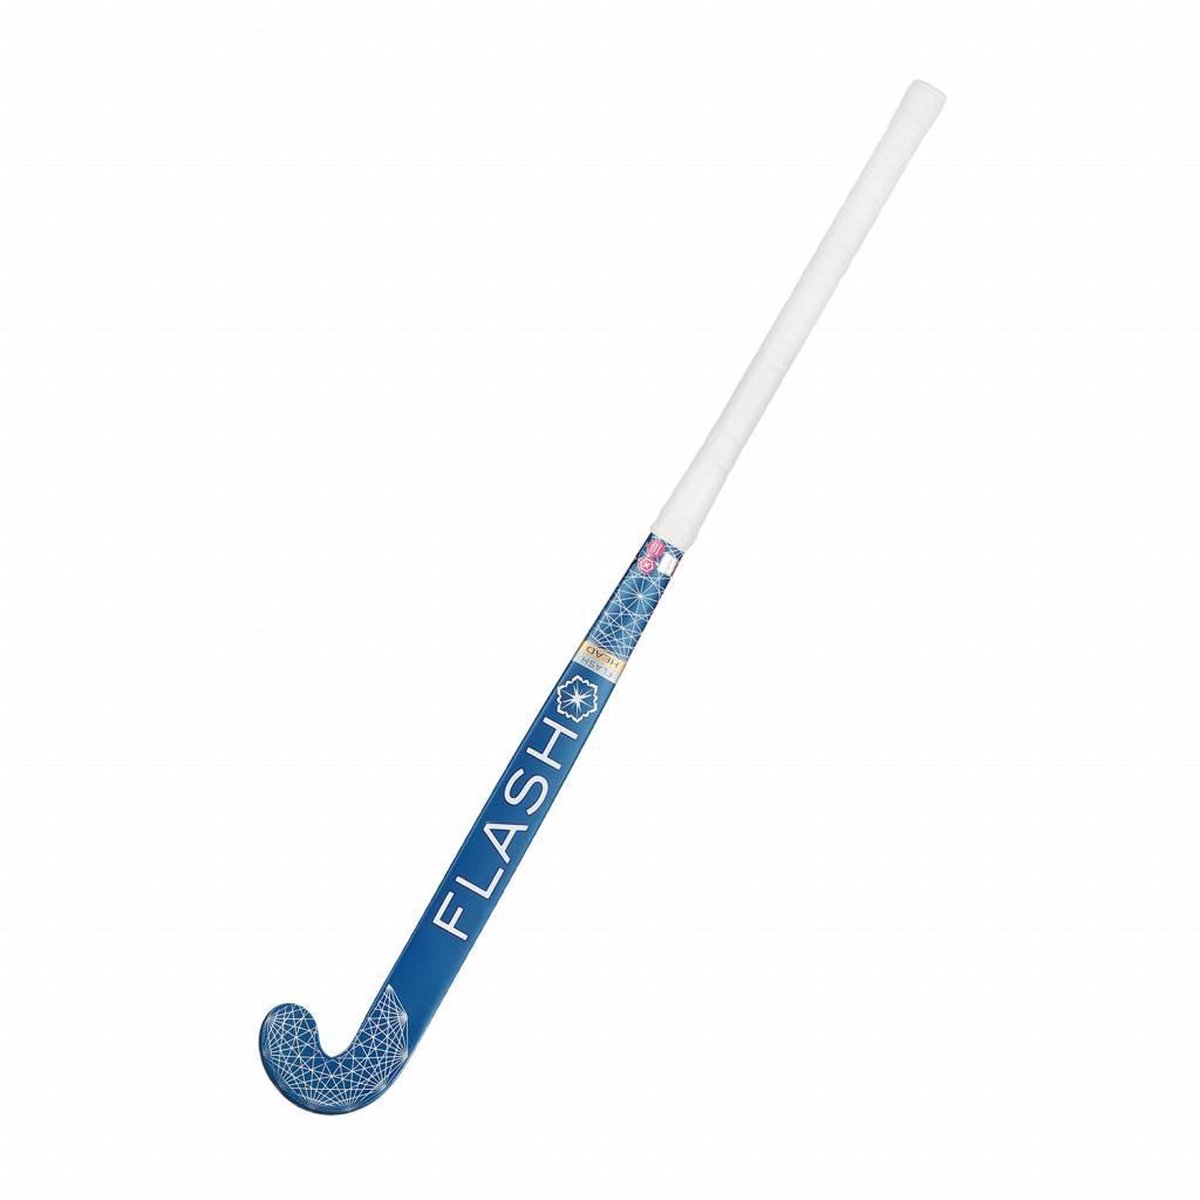 FLASH Hockey - Kinder Hockeystick - Blauw - Lengte 34 inch